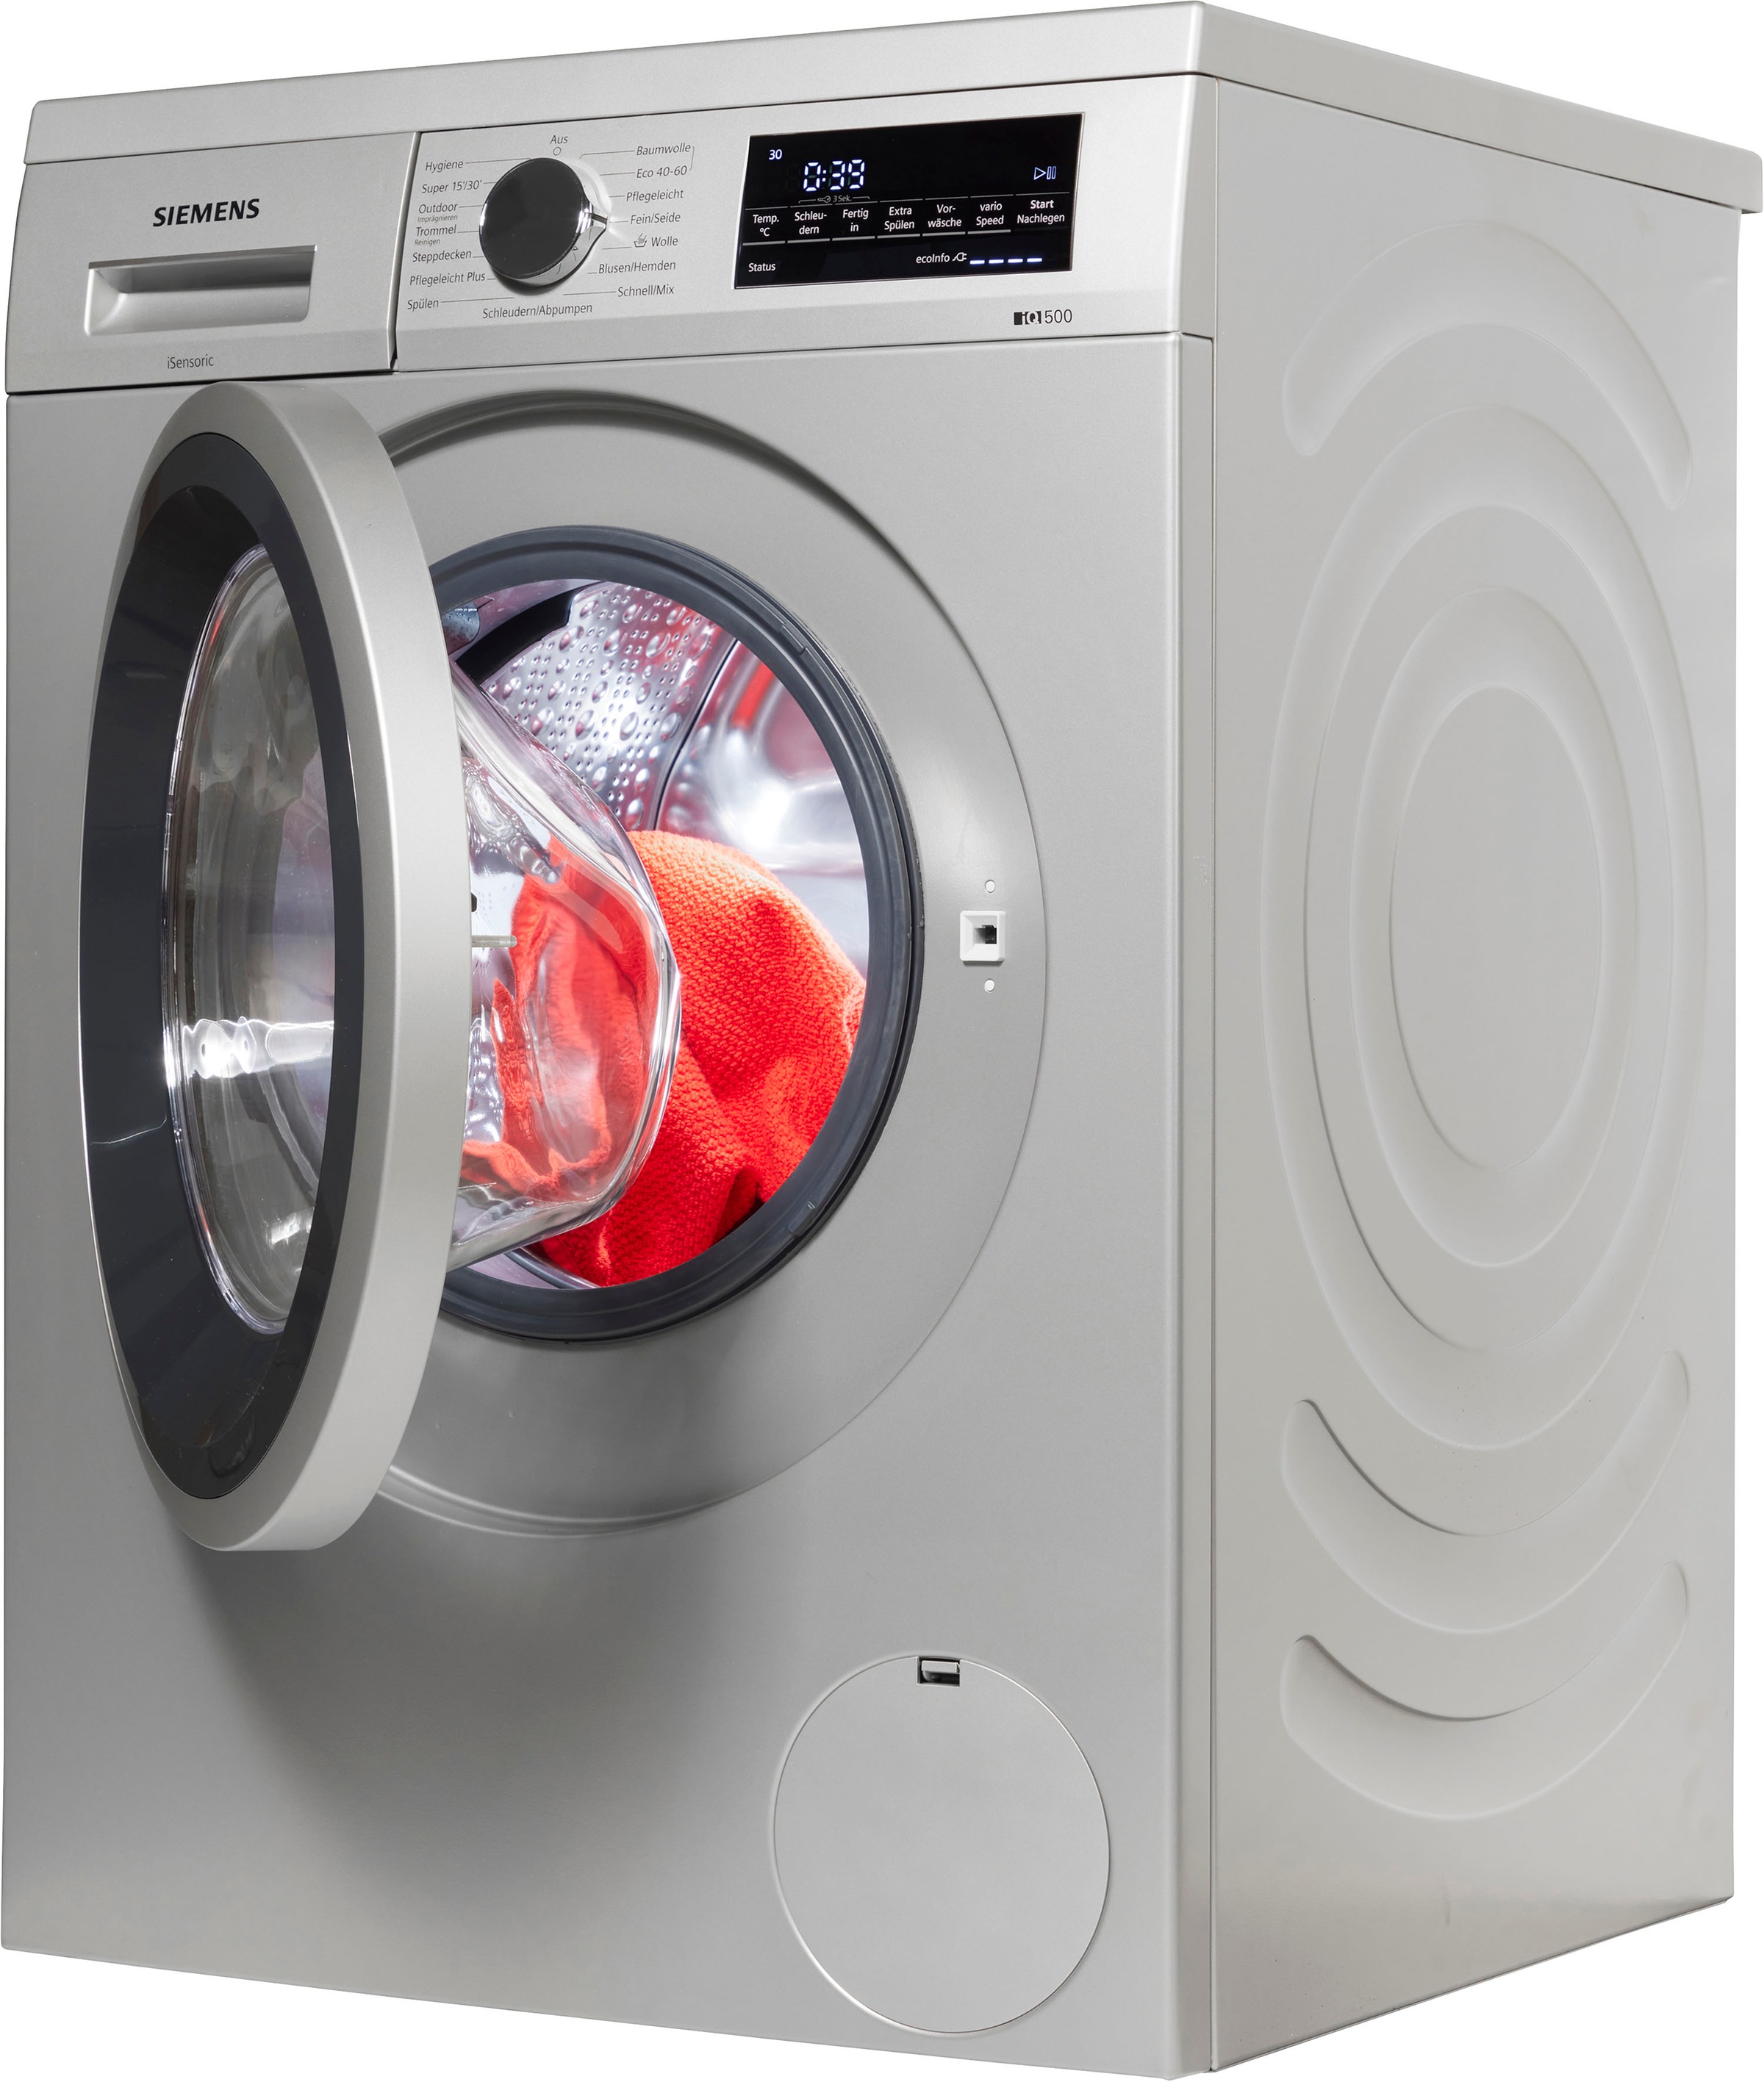 SIEMENS Waschmaschine OTTO »WU14UTS9«, 1400 kaufen 9 kg, WU14UTS9, U/min bei